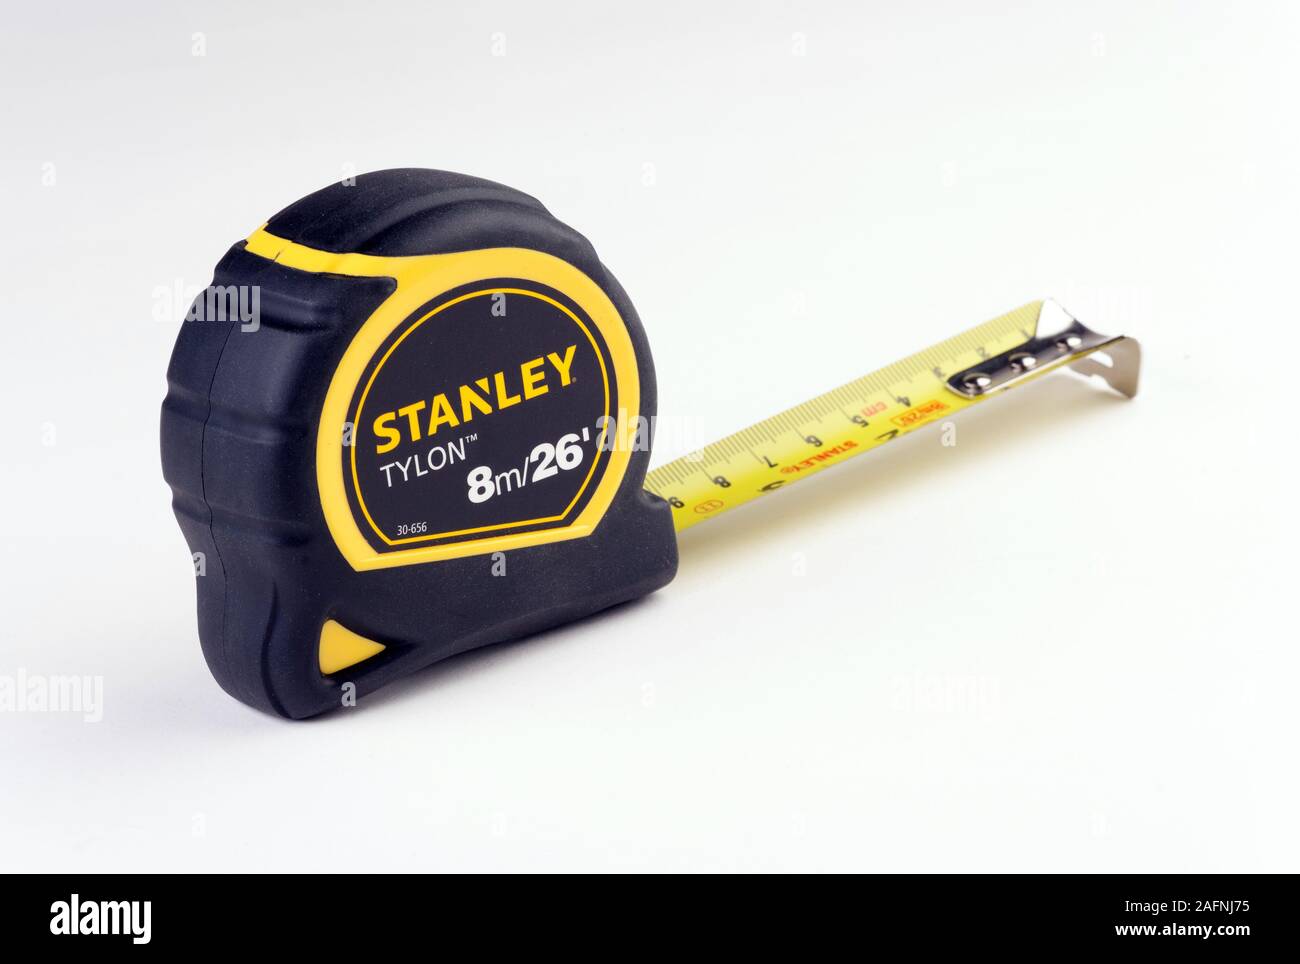 Stanley steel tape measure Stock Photo